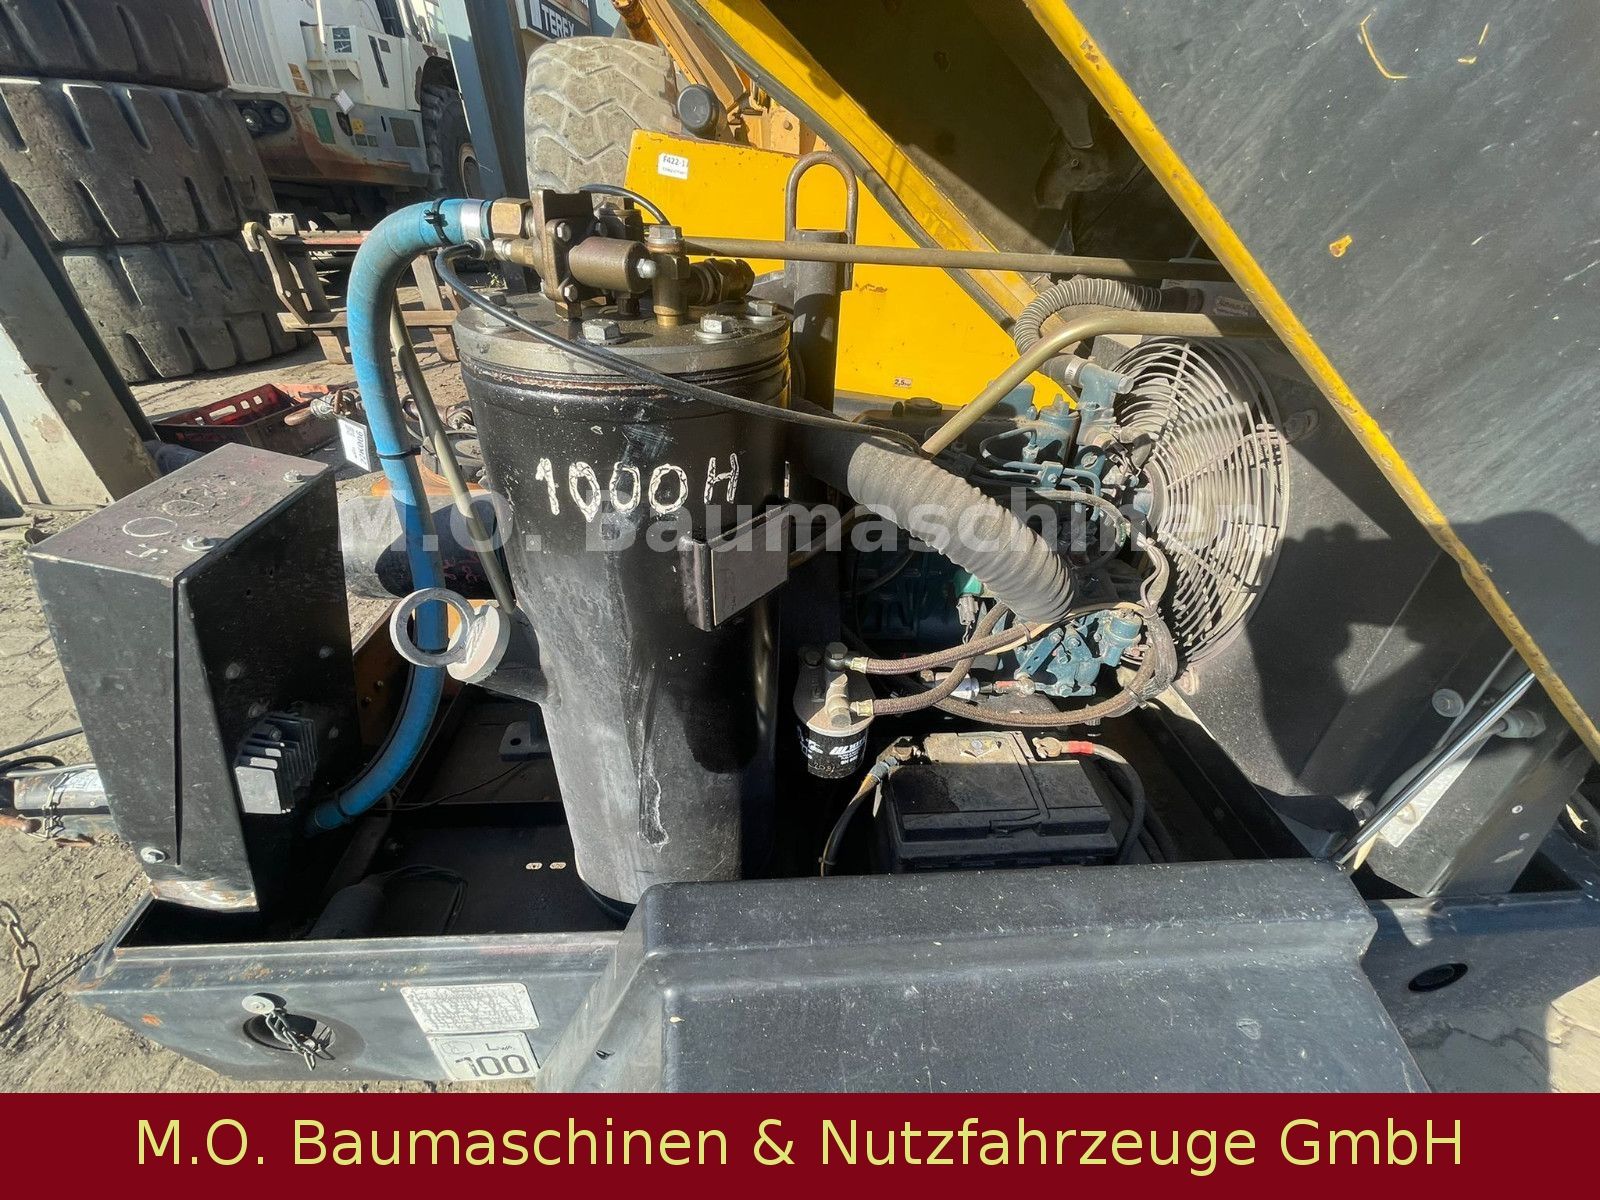 Fahrzeugabbildung Kaeser M22 / Kompressor / 7 Bar /